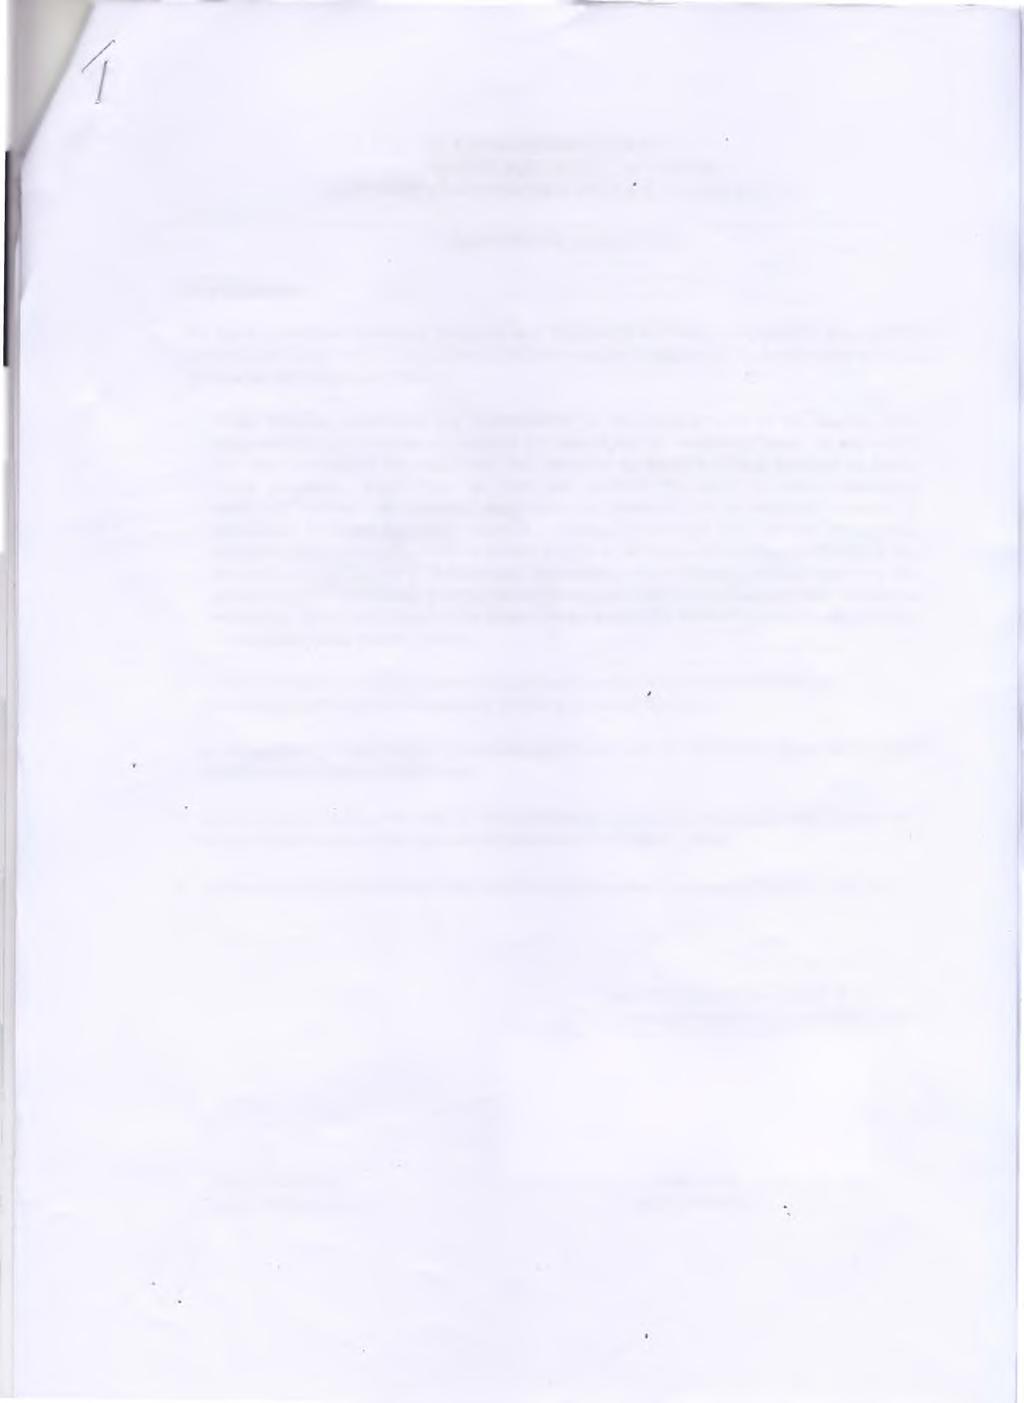 JOGLEKAR MAITRA & CO. MIG D-18, SHAILENDRA NAGAR, RAIPUR (C.G.) REPORT OF AUDITORS To the Members, We have examined annexed Receipts and Payments account of AAZADI KA ANTIM ANDOLAN DAL MIG D-27, SHAILENDRA NAGAR Raipur (C.